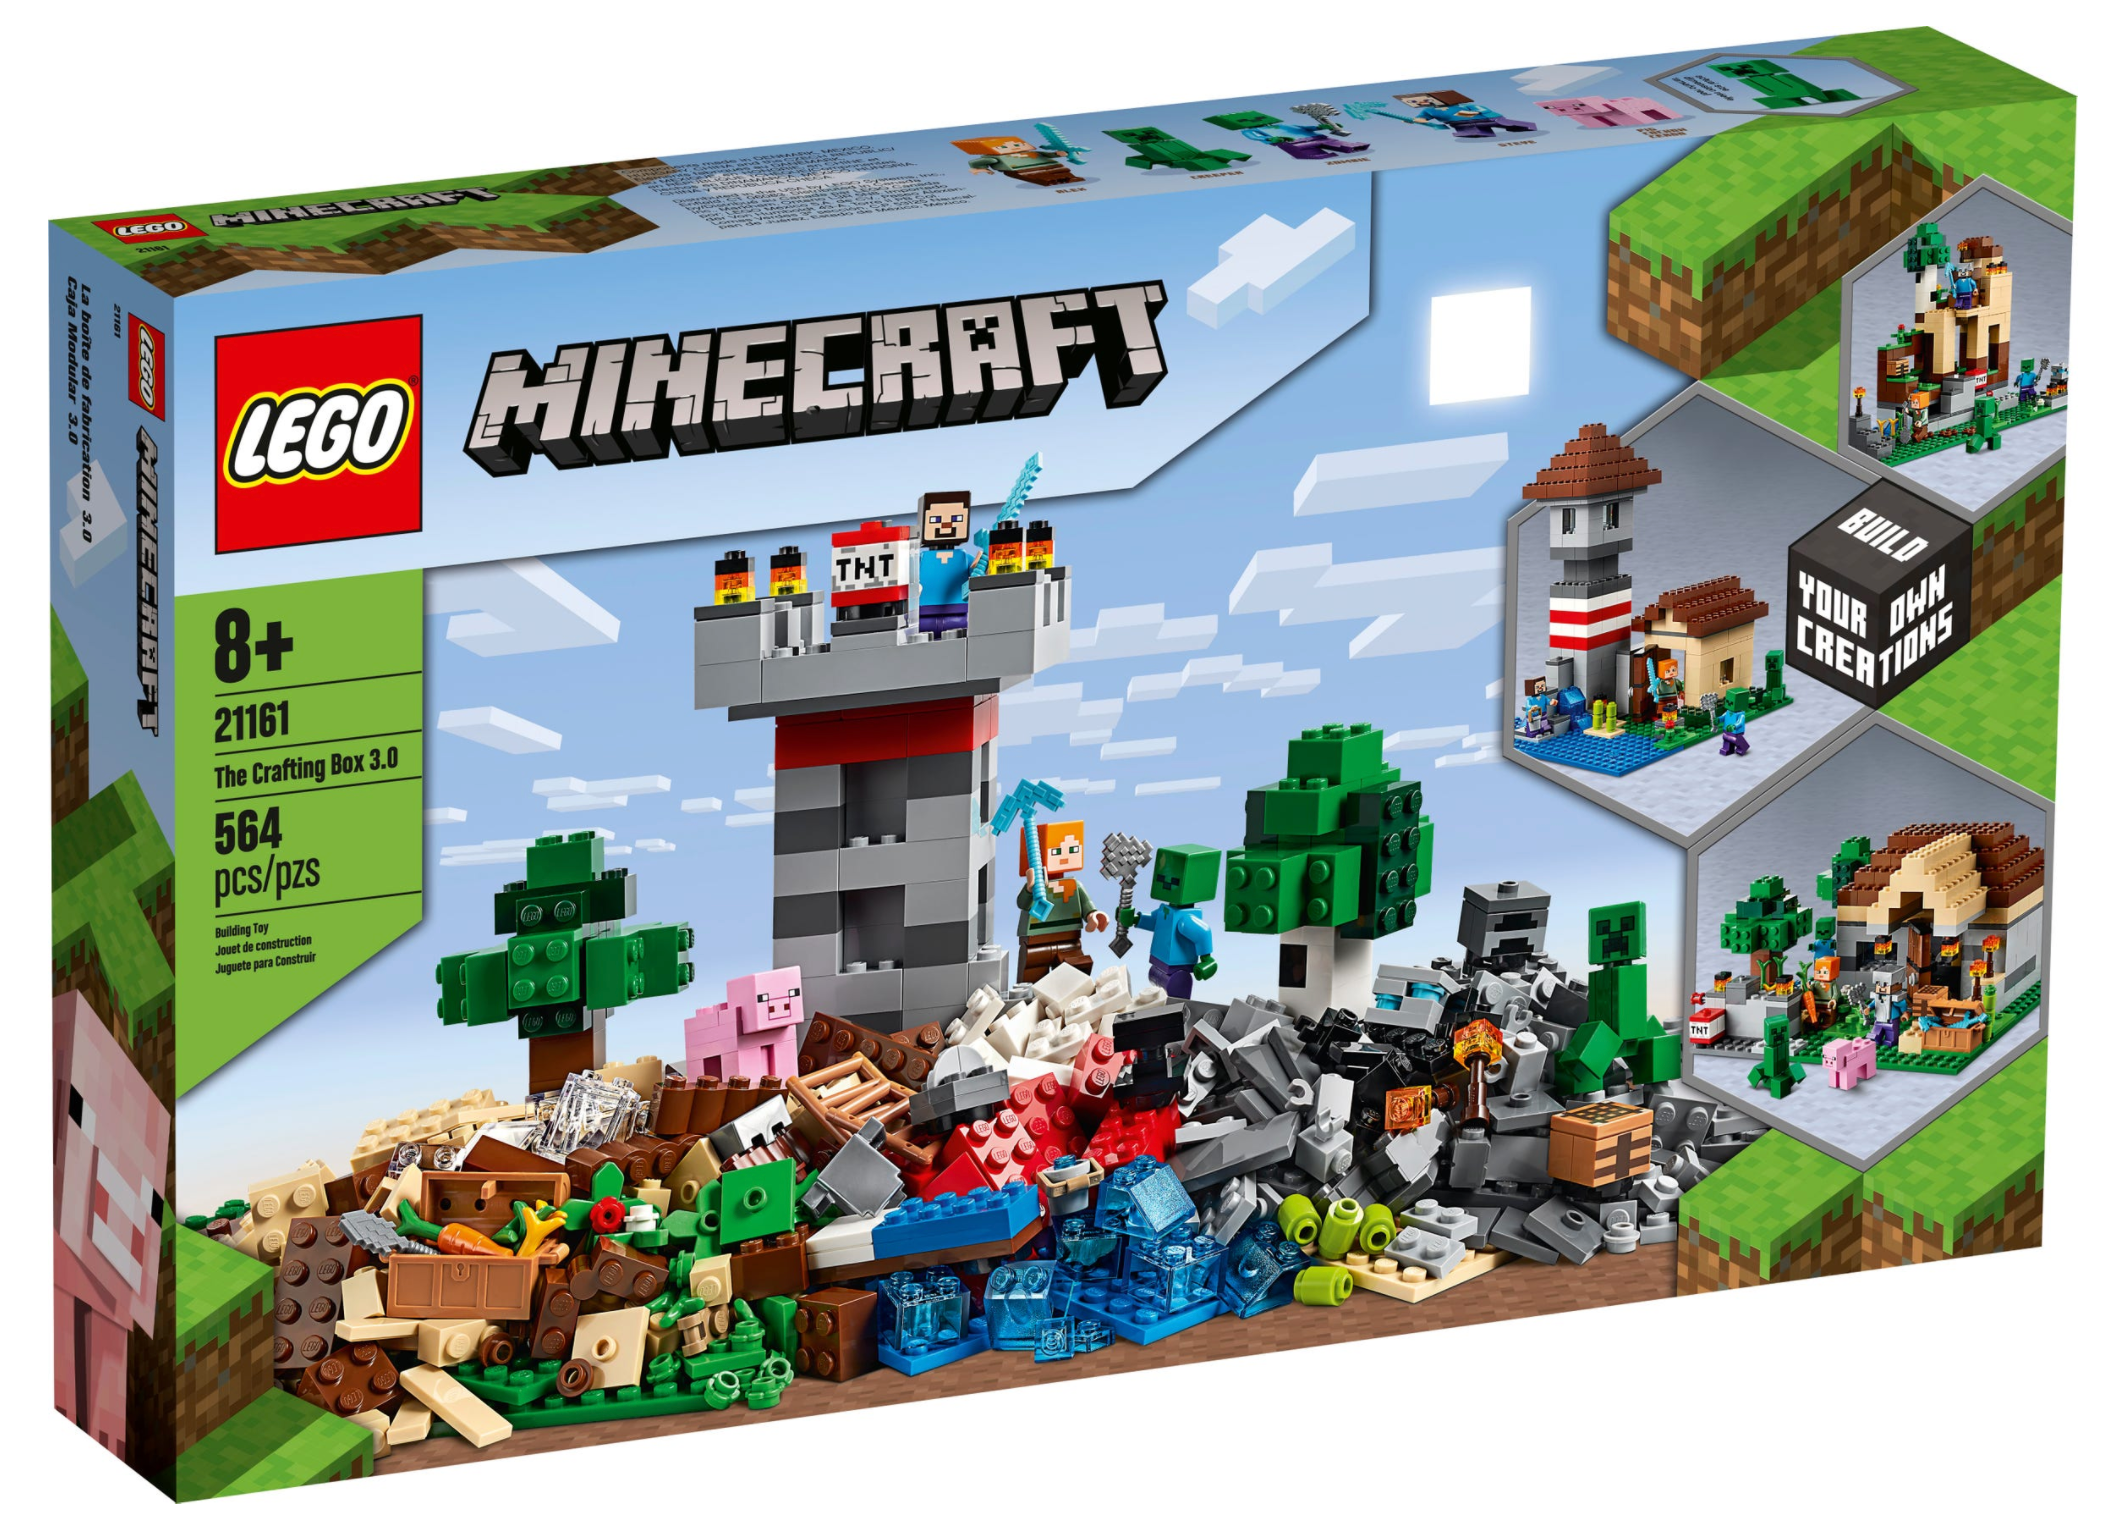 LEGO: Minecraft - The Crafting Box 3.0